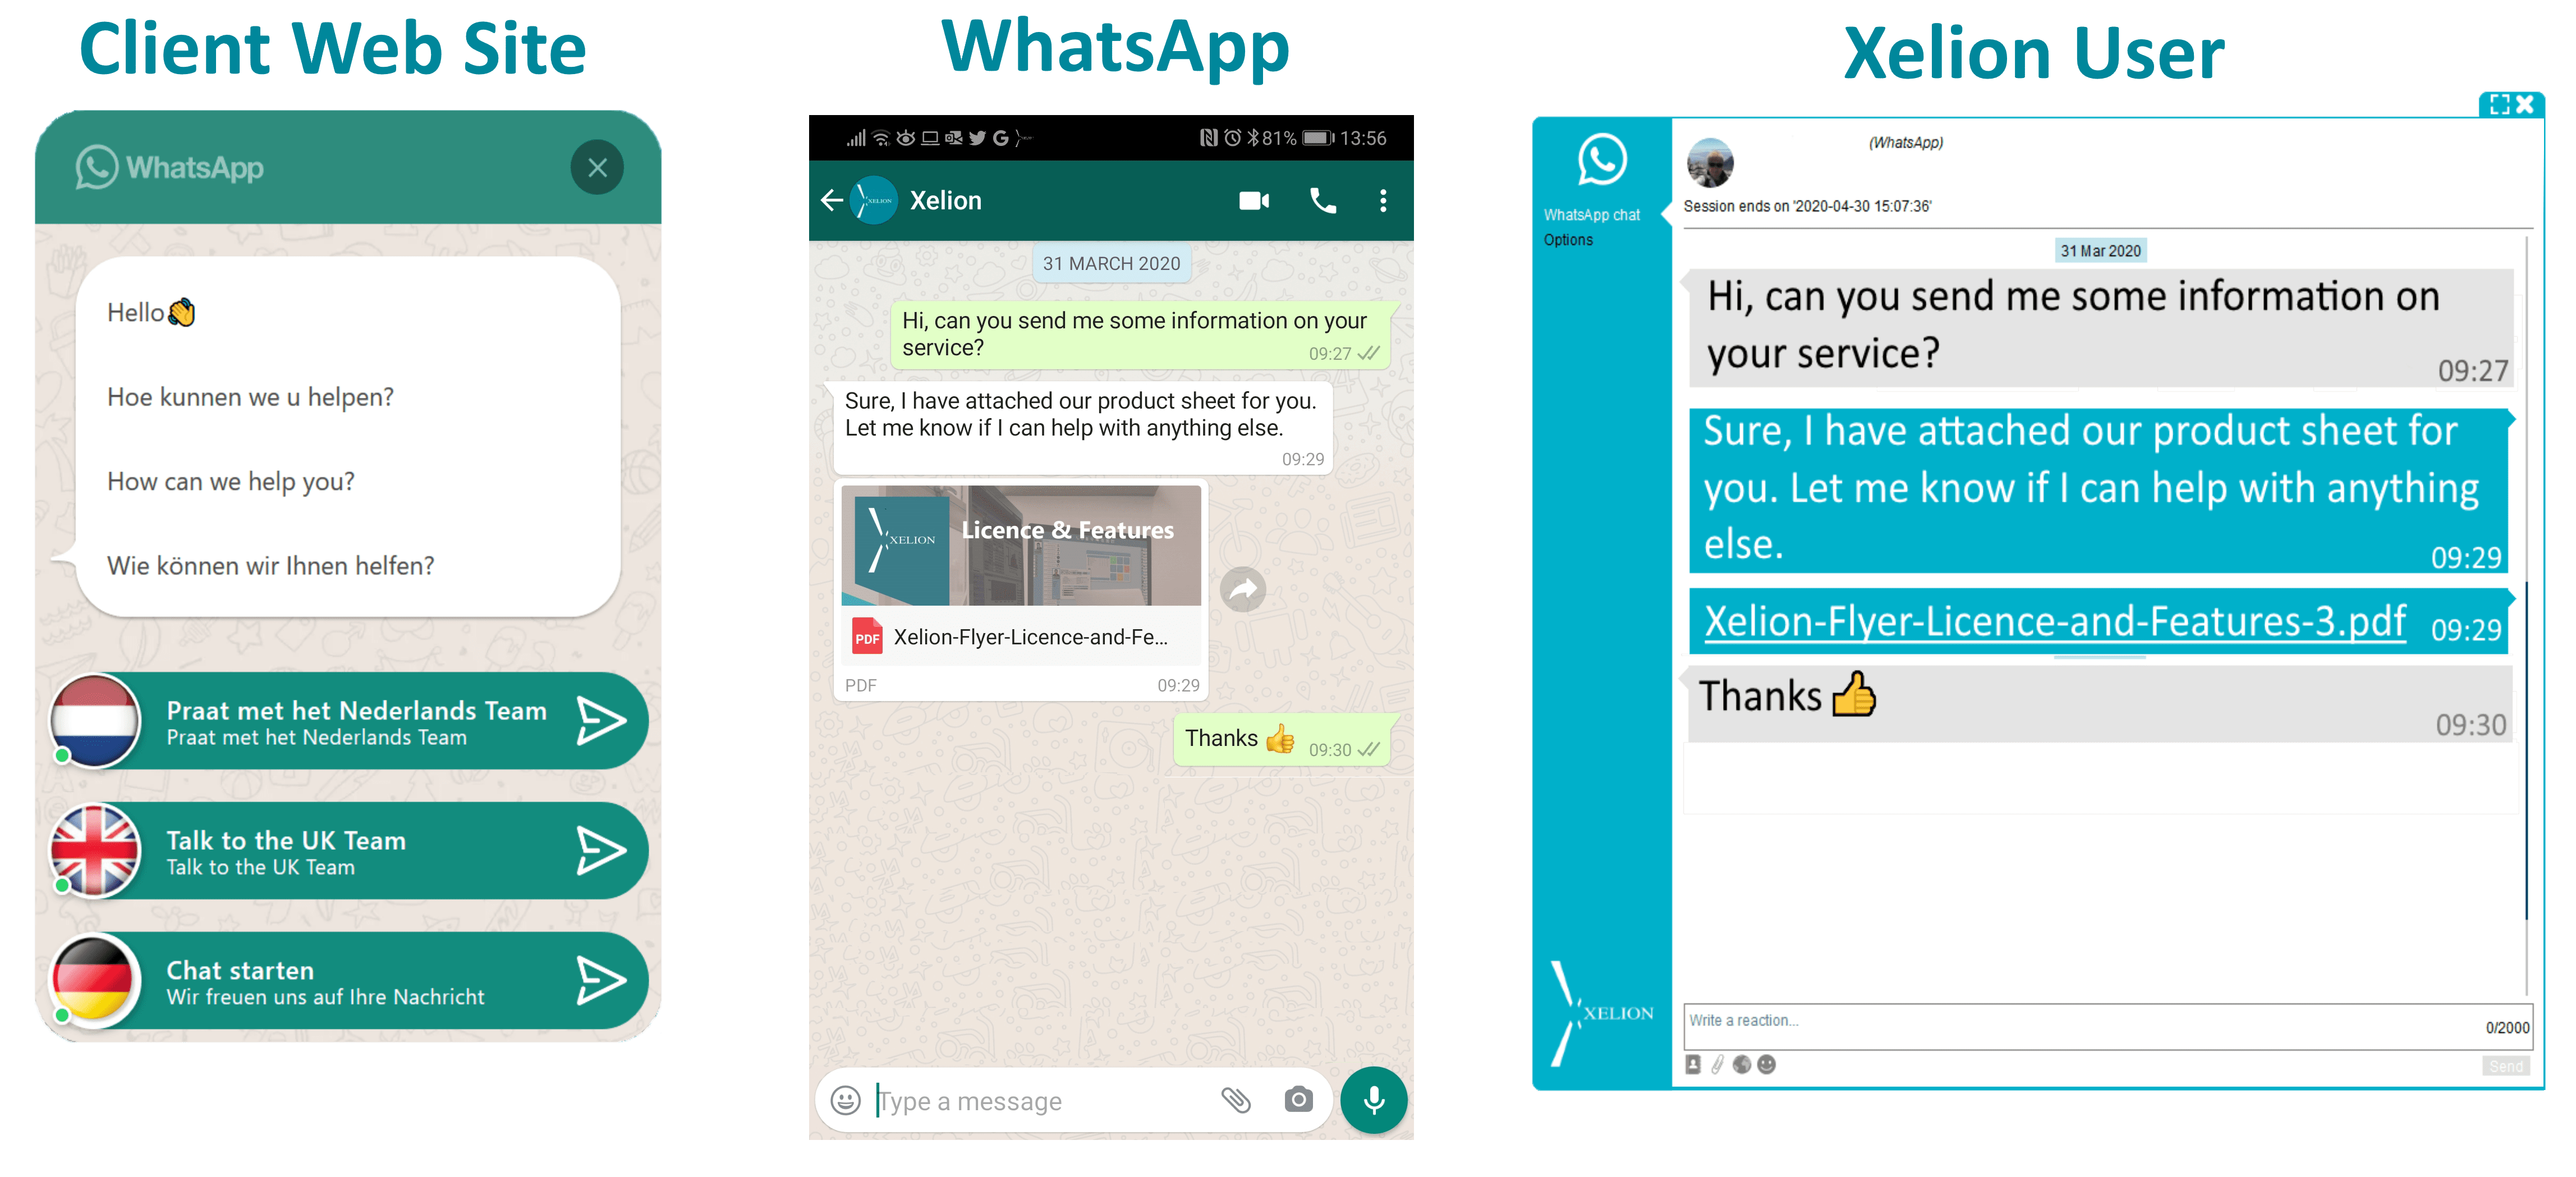 Xelion offers WhatsApp integration